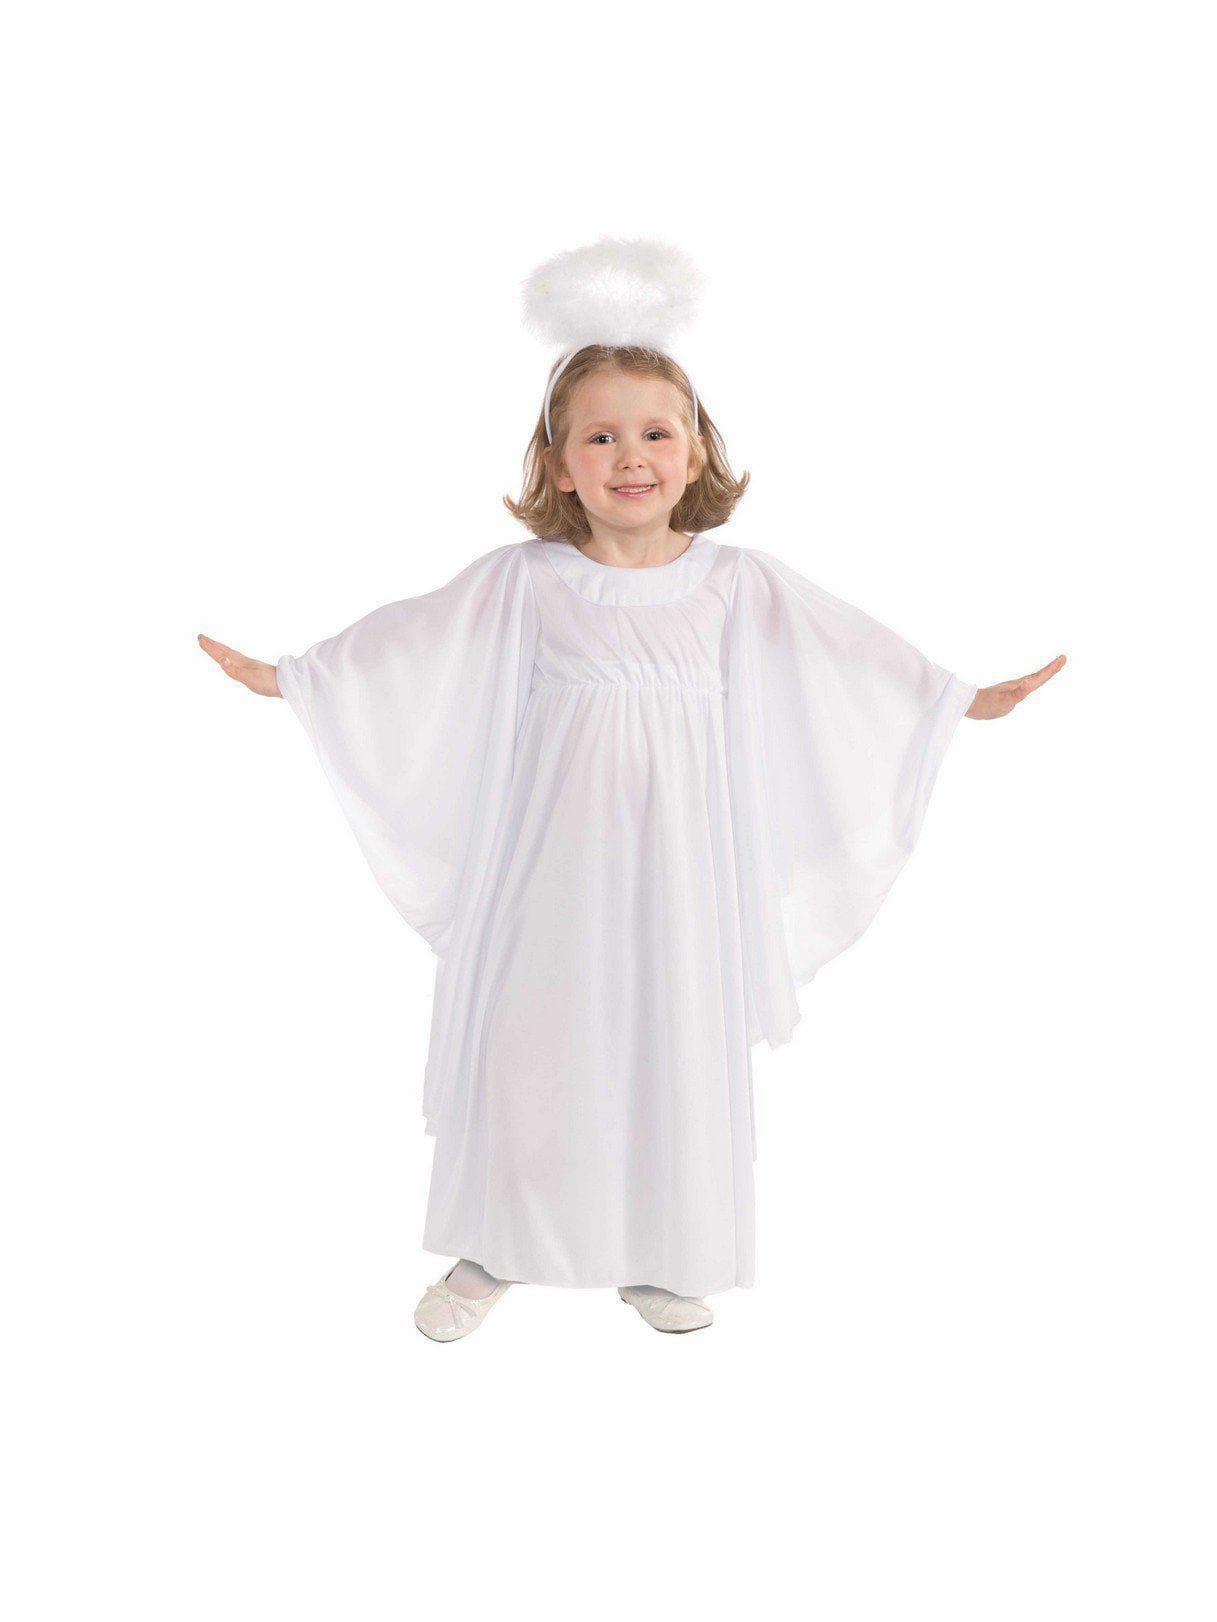 Girls' Angelic Robe and Halo - costumes.com